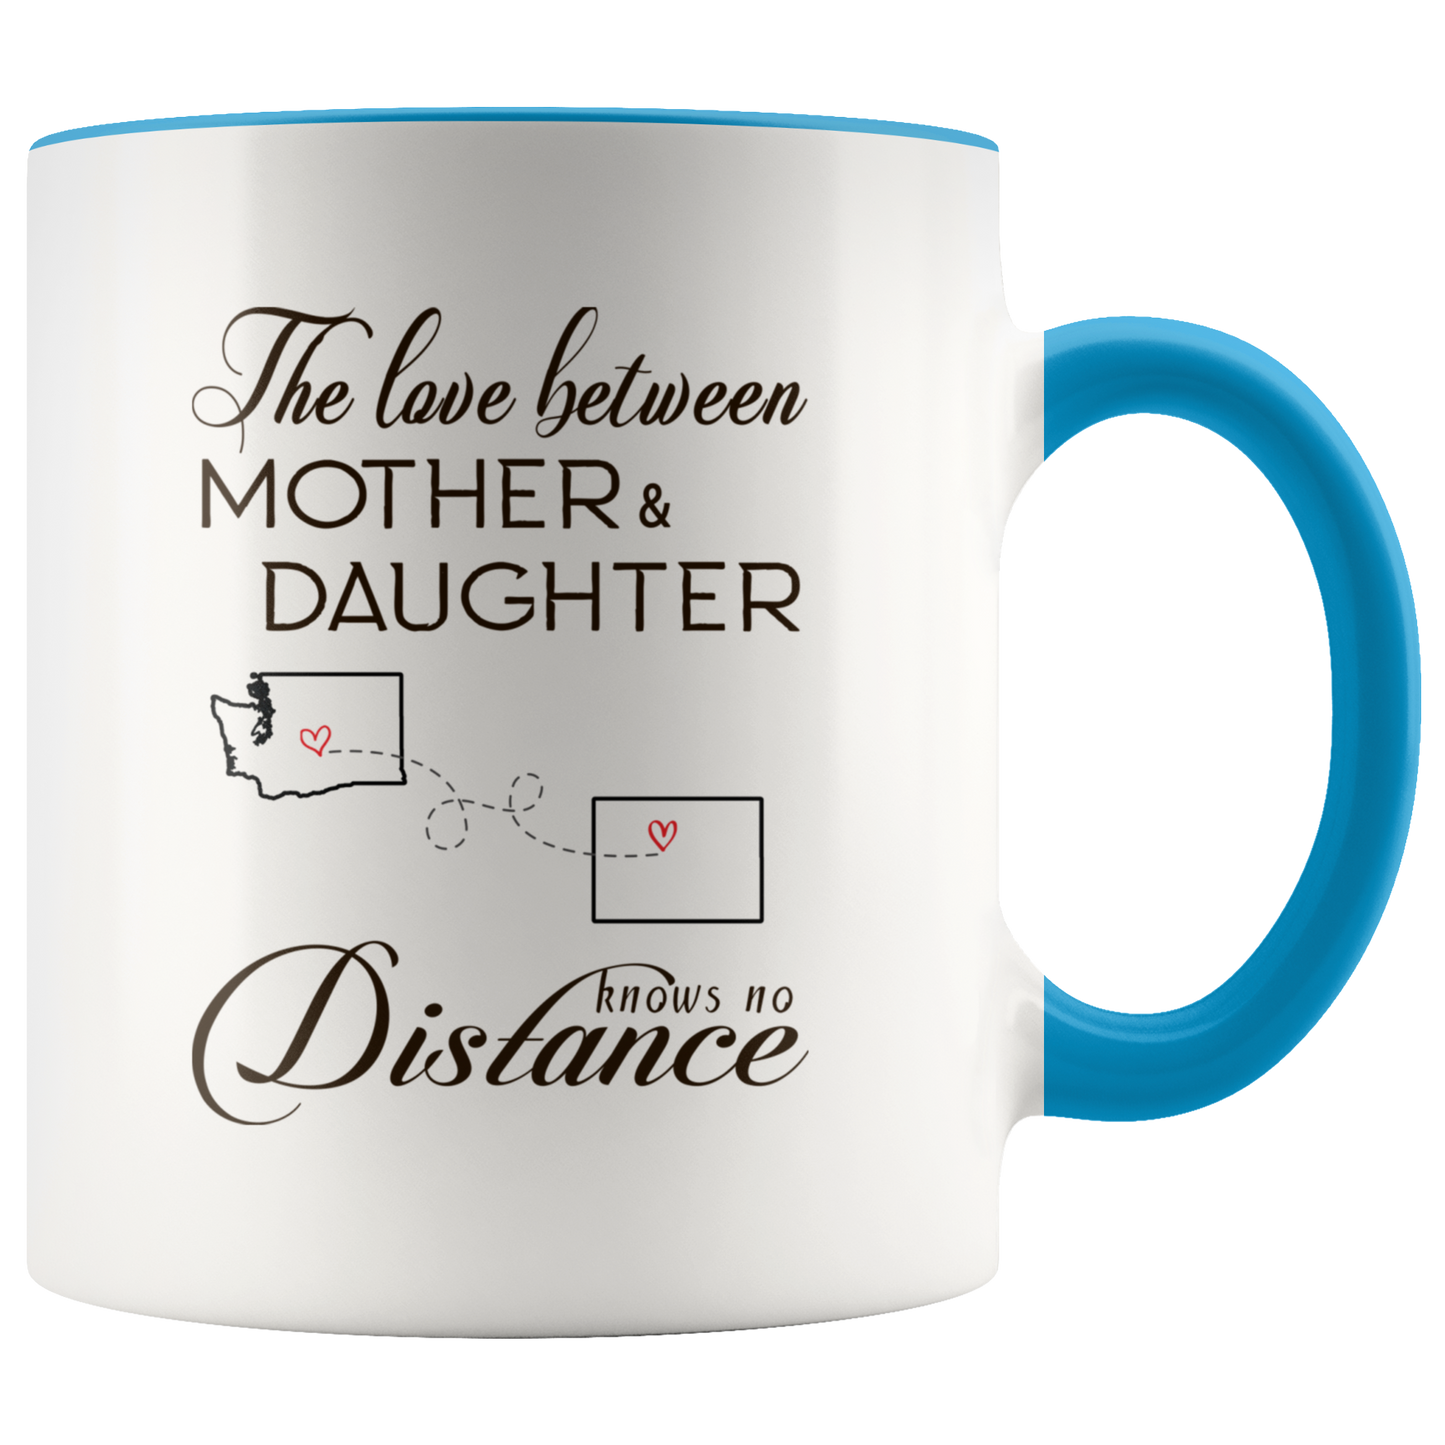 ND-21334670-sp-27521 - [ Washington | Colorado ] (CC_Accent_Mug_) Long Distance Accent Mug 11 oz  - The Love Between Mother